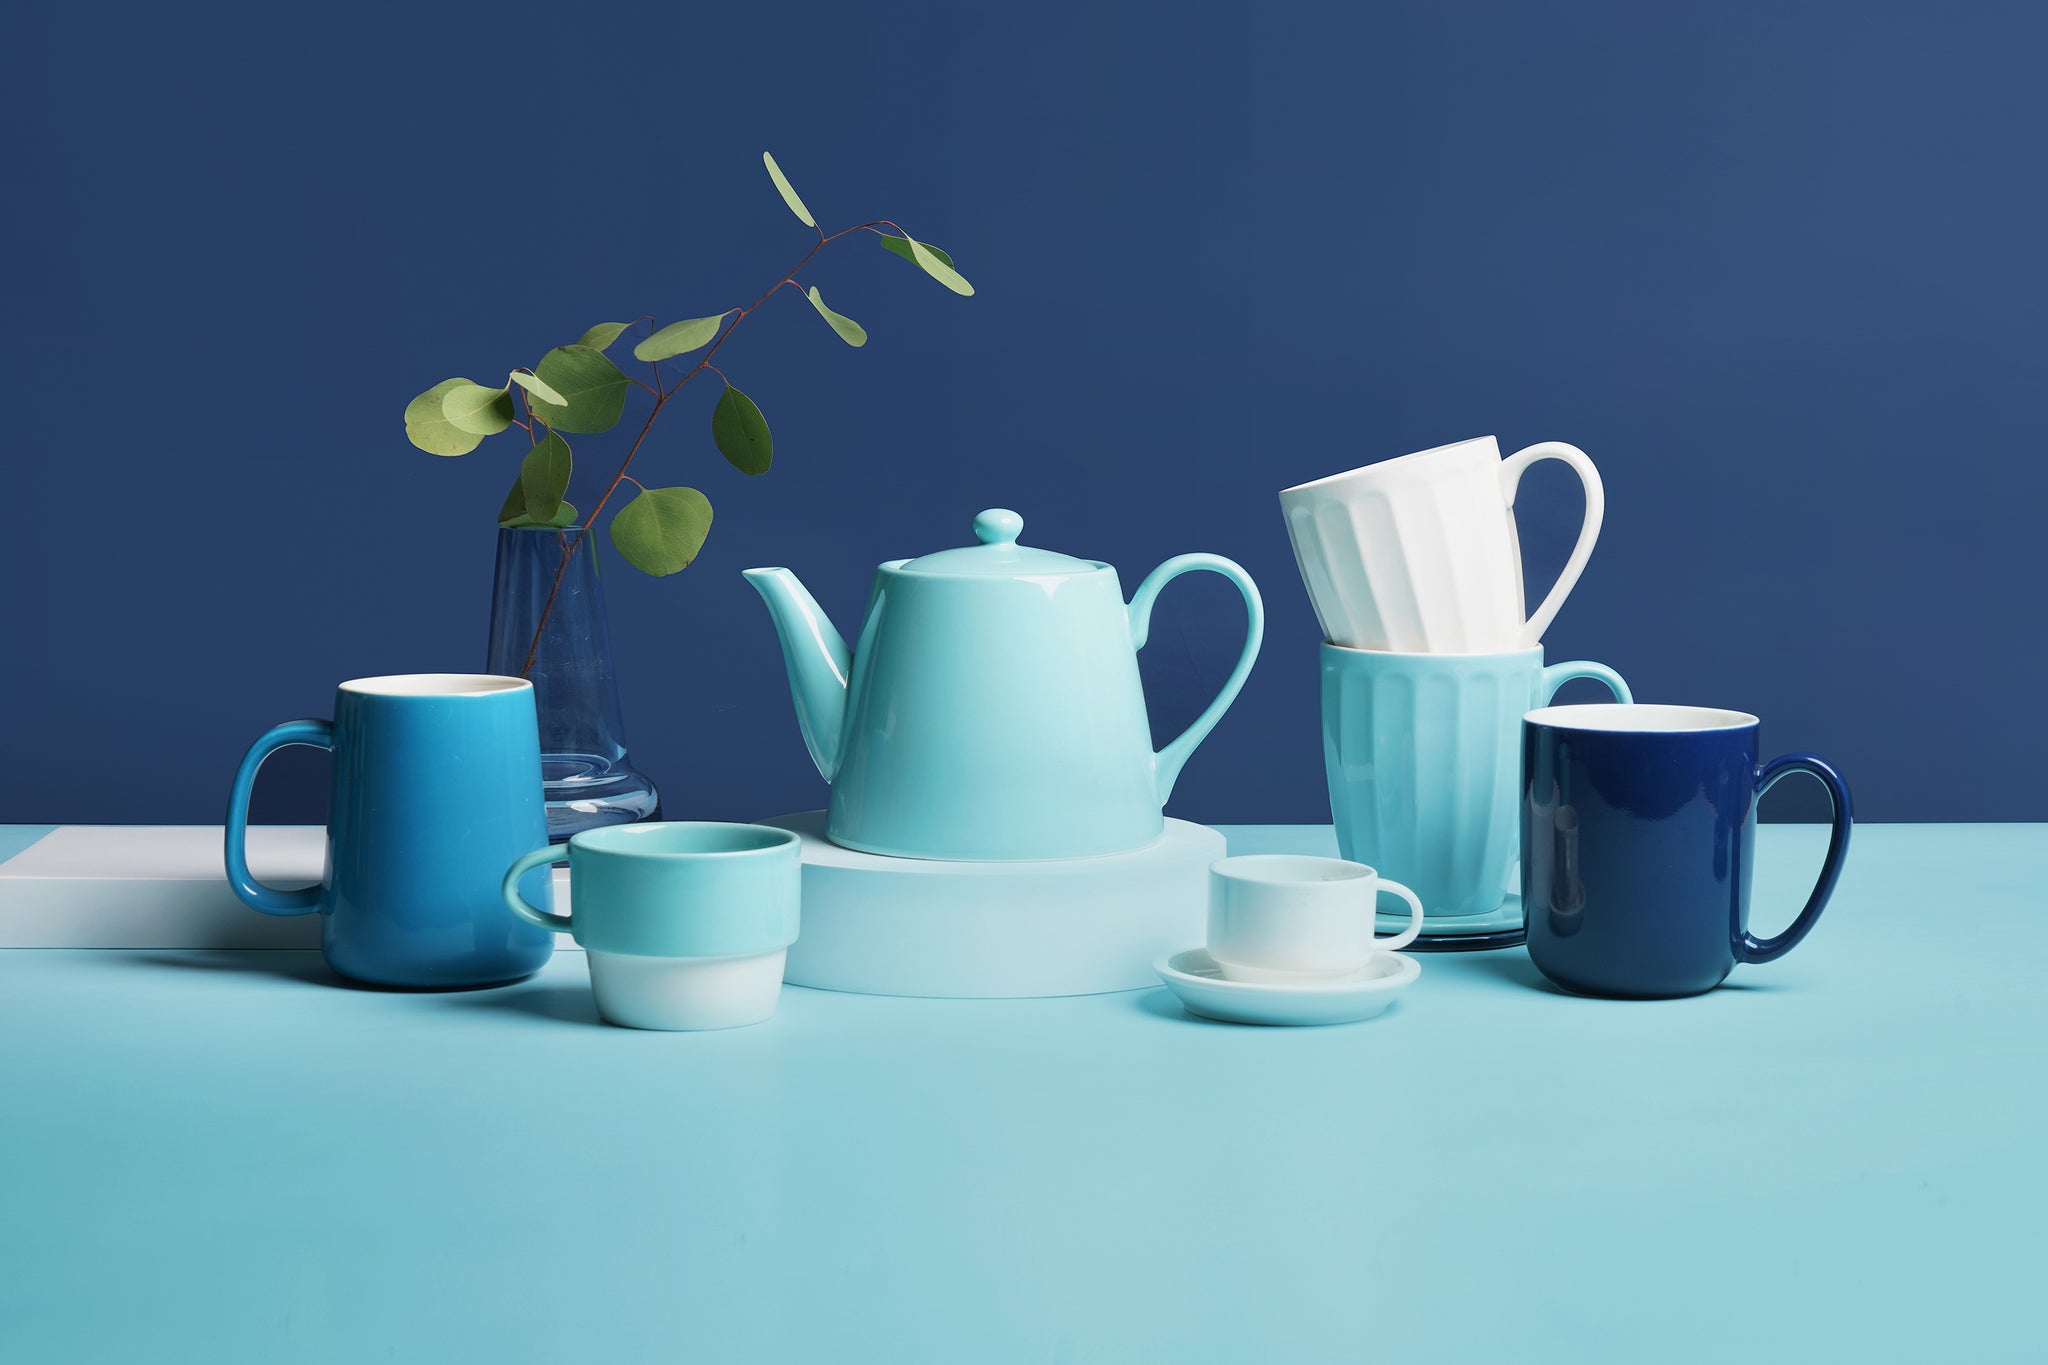 Fun Ways To Use A Tea Infuser Mug That Aren't Just Making Tea